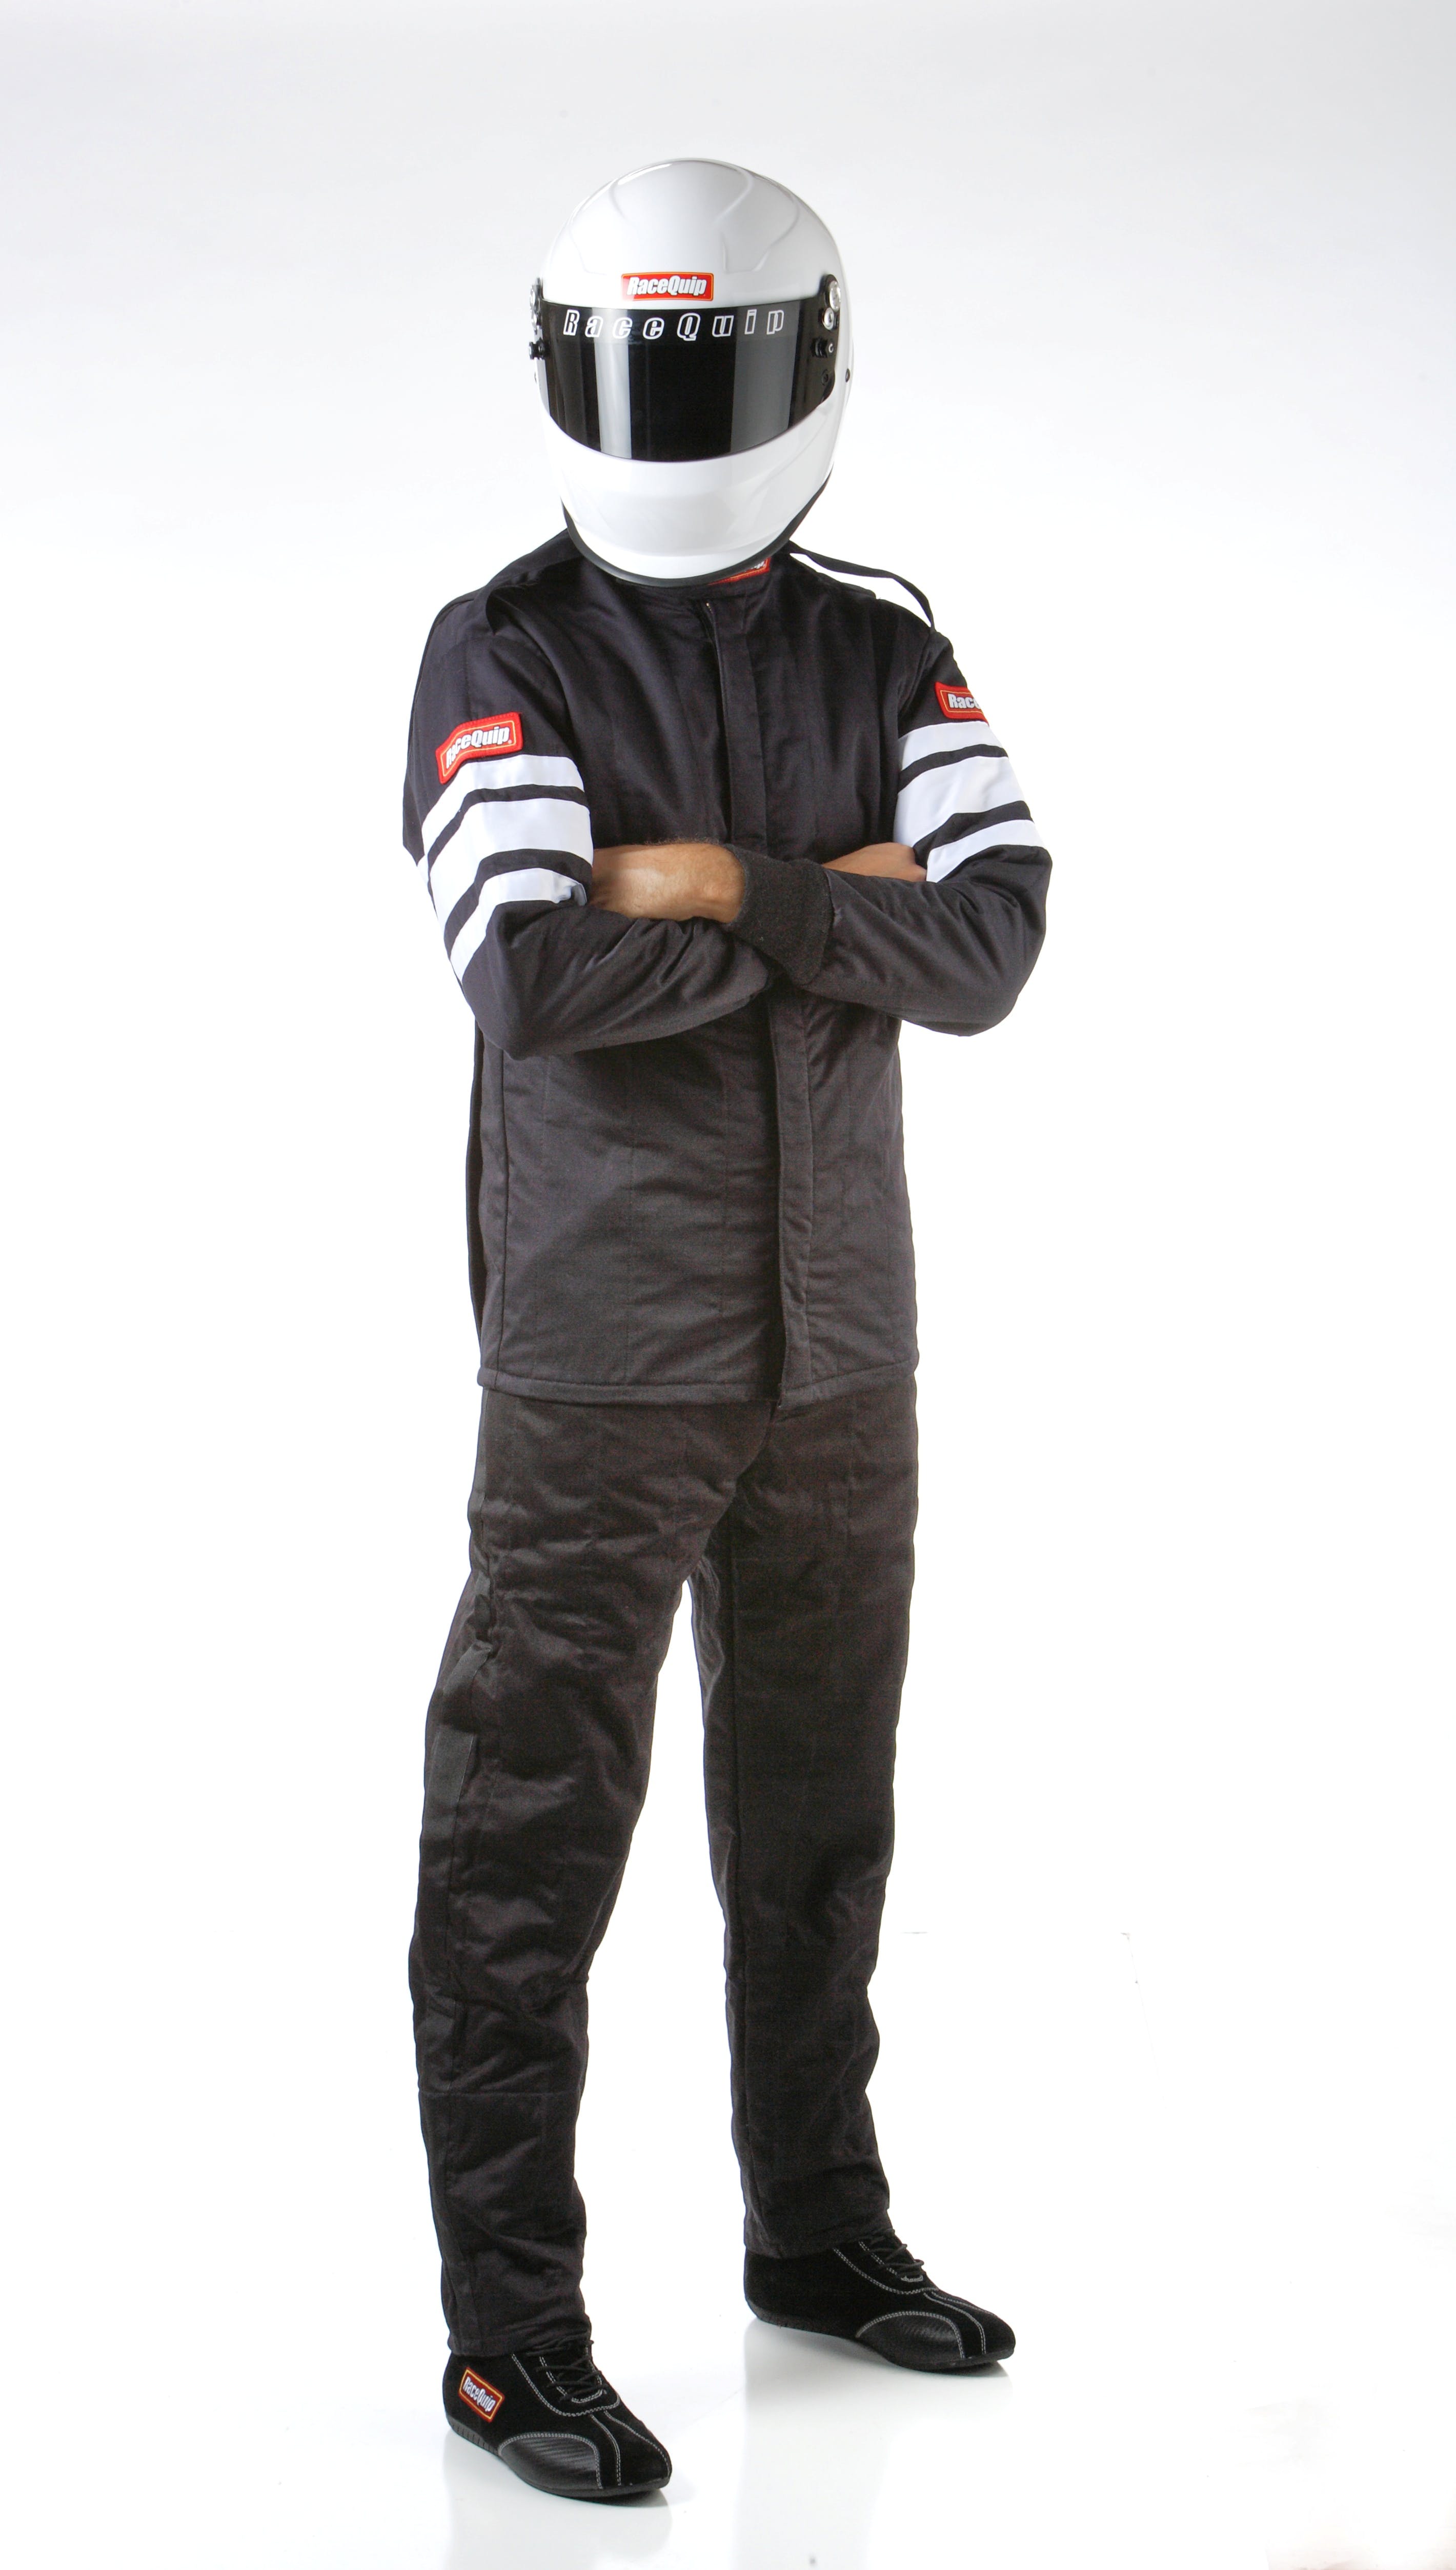 RaceQuip 121002 SFI-5 Pyrovatex Multi-Layer Racing Fire Jacket (Black, Small)